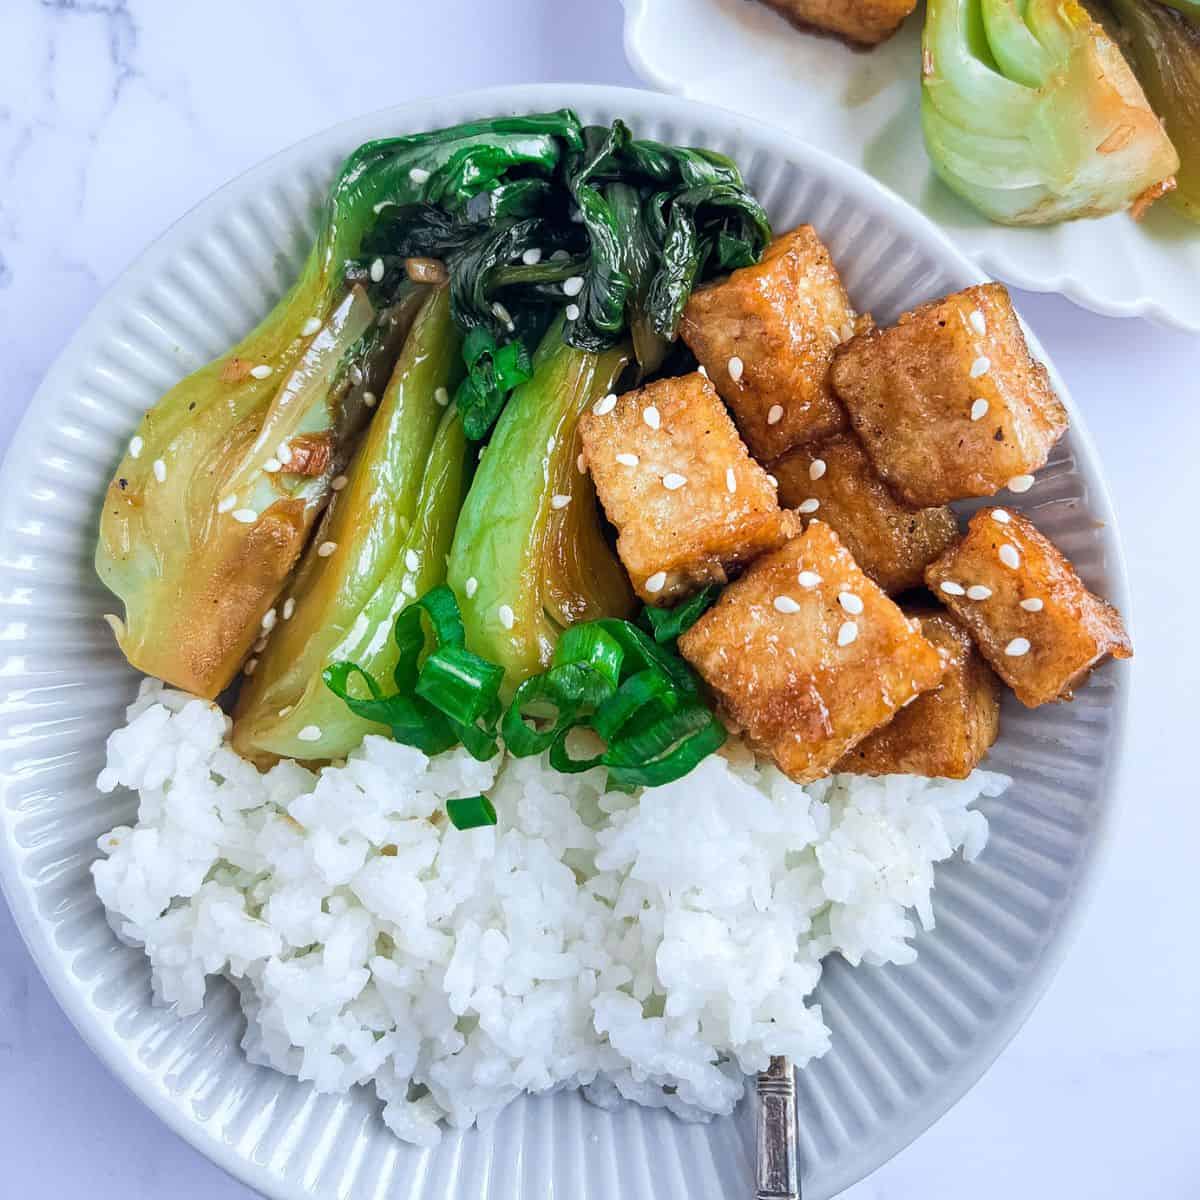 Tofu and bok choy stir-fry finish dish.